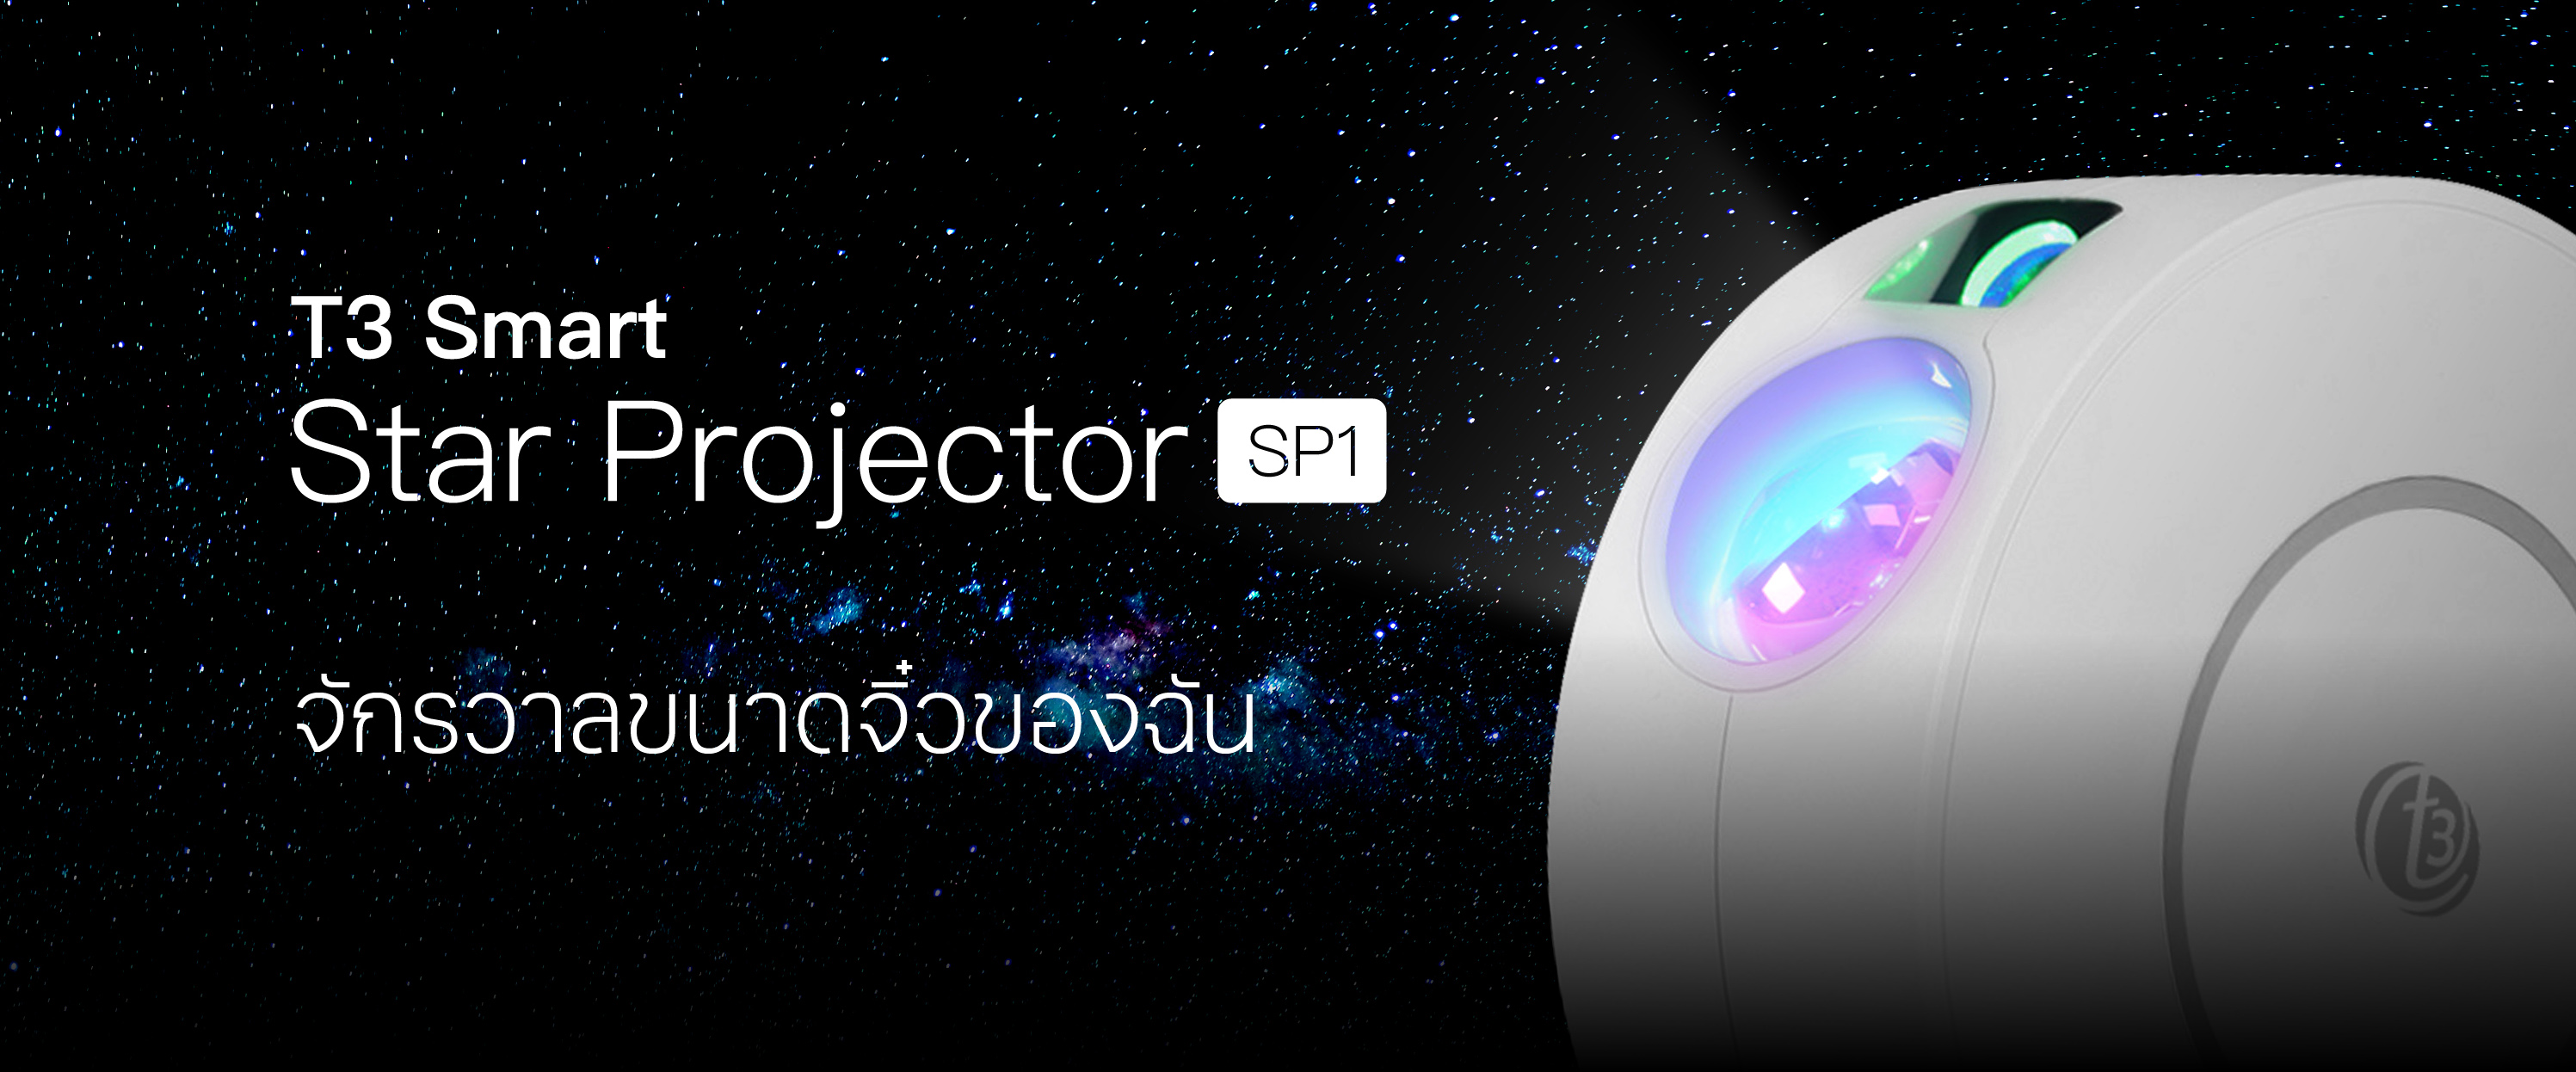 T3 Smart Star Projector SP1